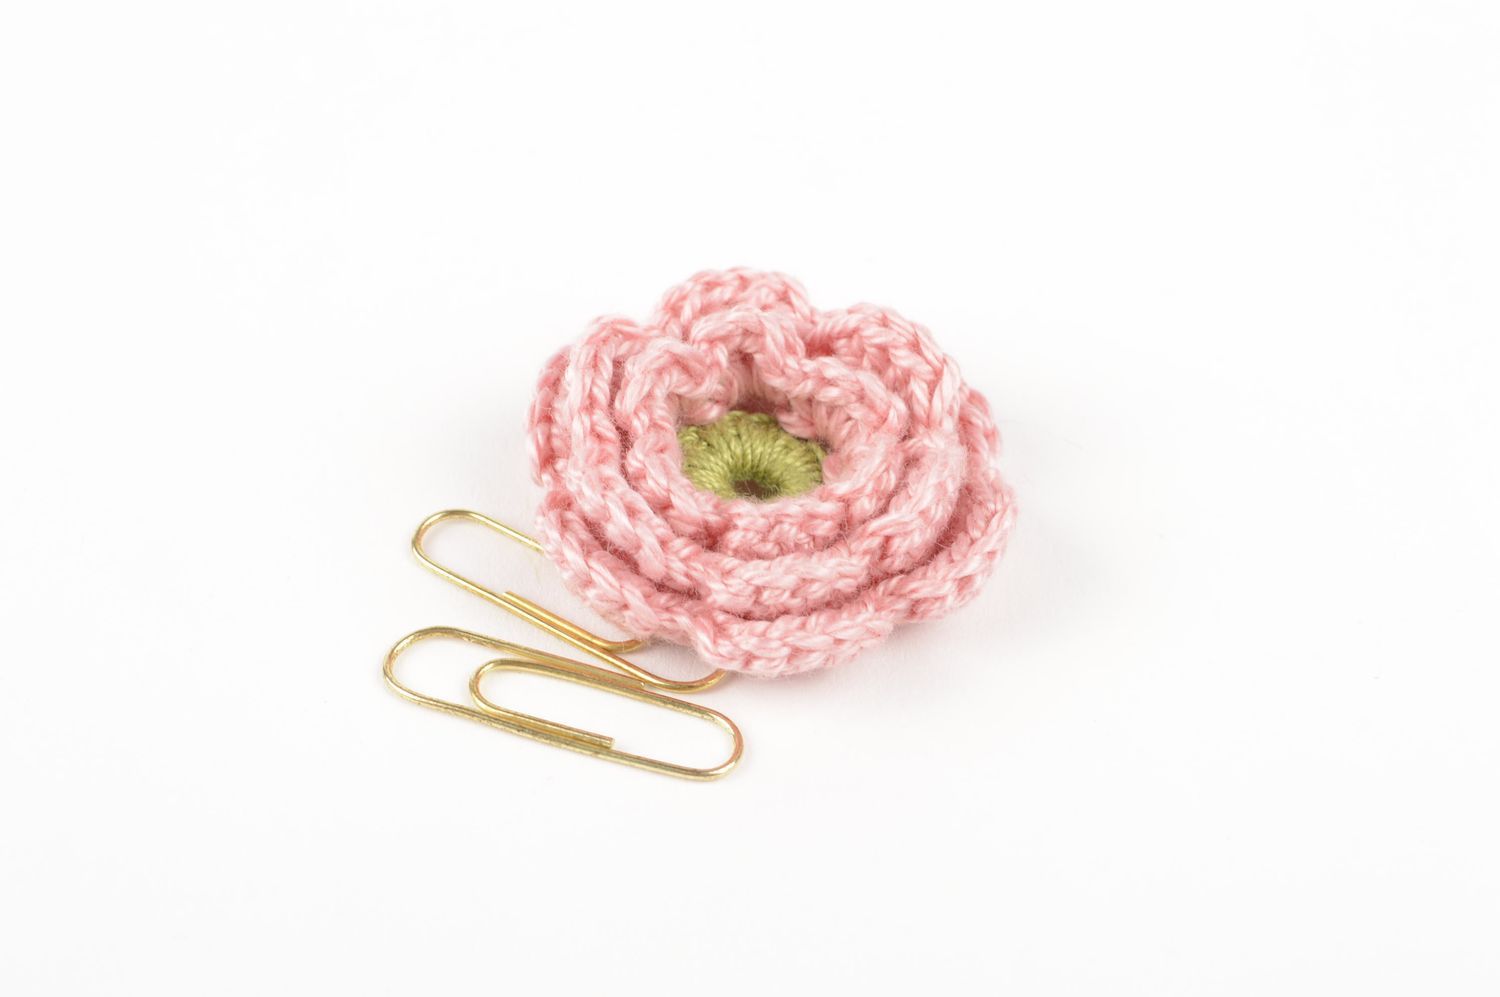 Handmade crochet accessories jewelry making supply flower brooch unique jewelry photo 5